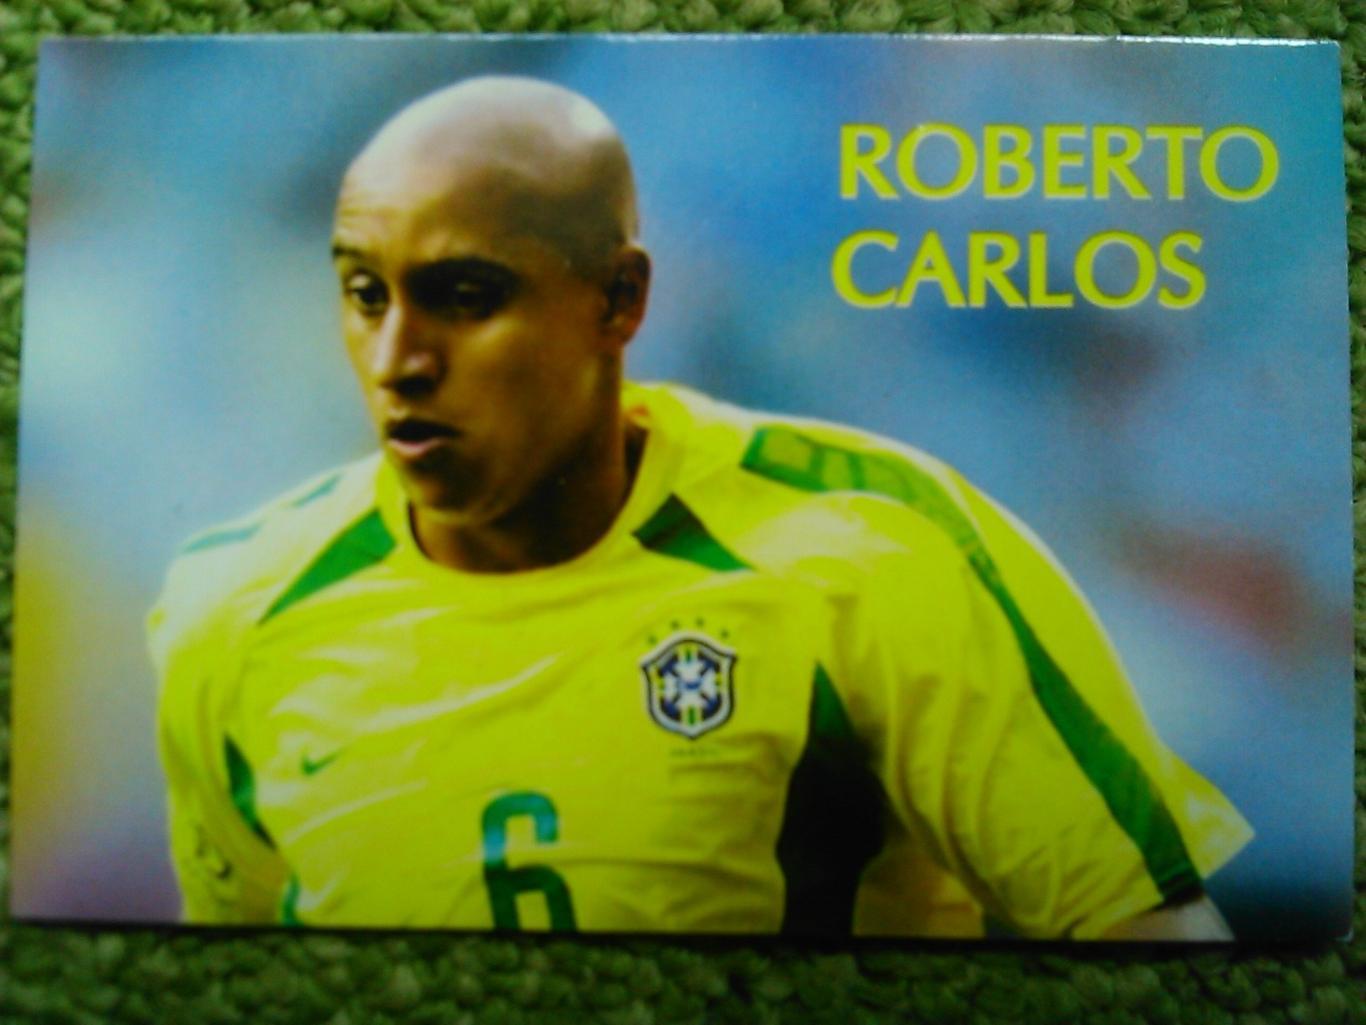 Roberto CARLOS (Бразилия- календарик 2008) Оптом скидки до 45%.